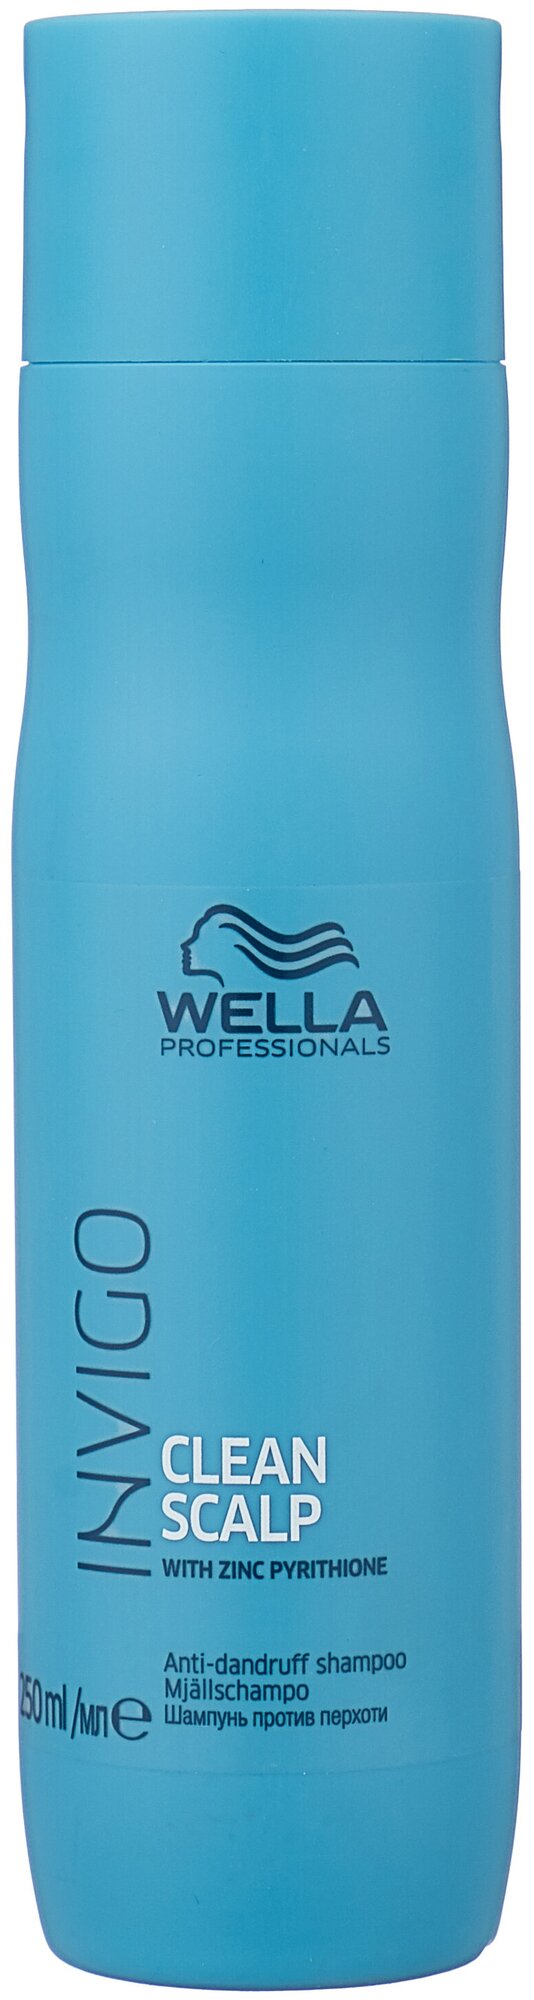 Wella Professionals шампунь Invigo Clean Scalp, 250 мл